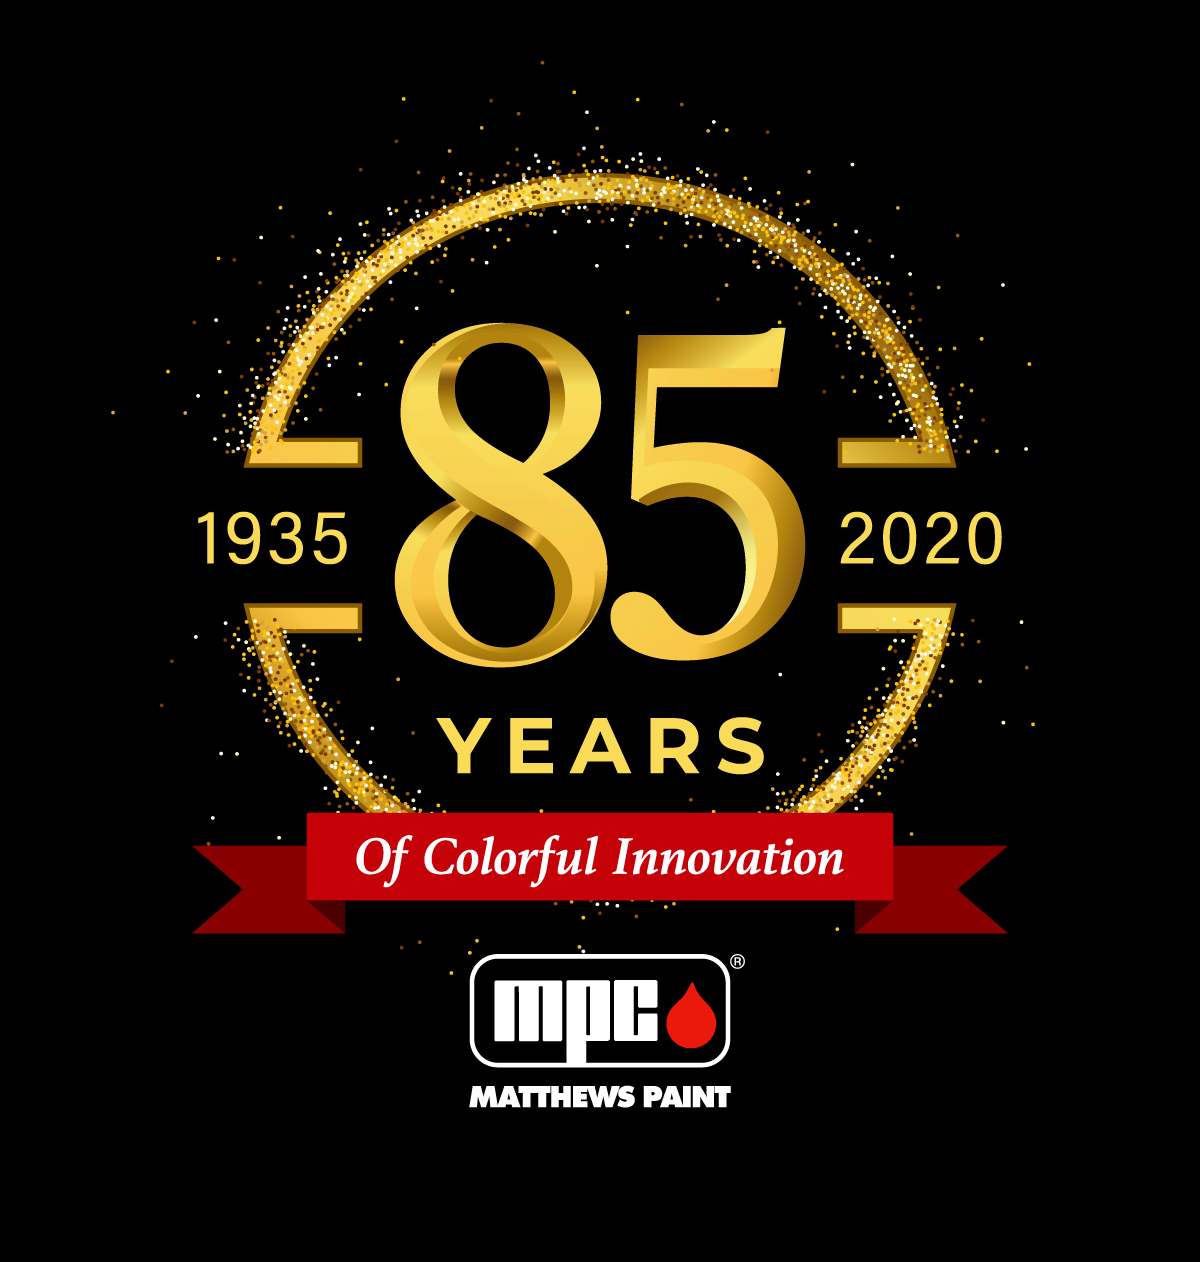 Matthews Paint's 85th Anniversary Logo